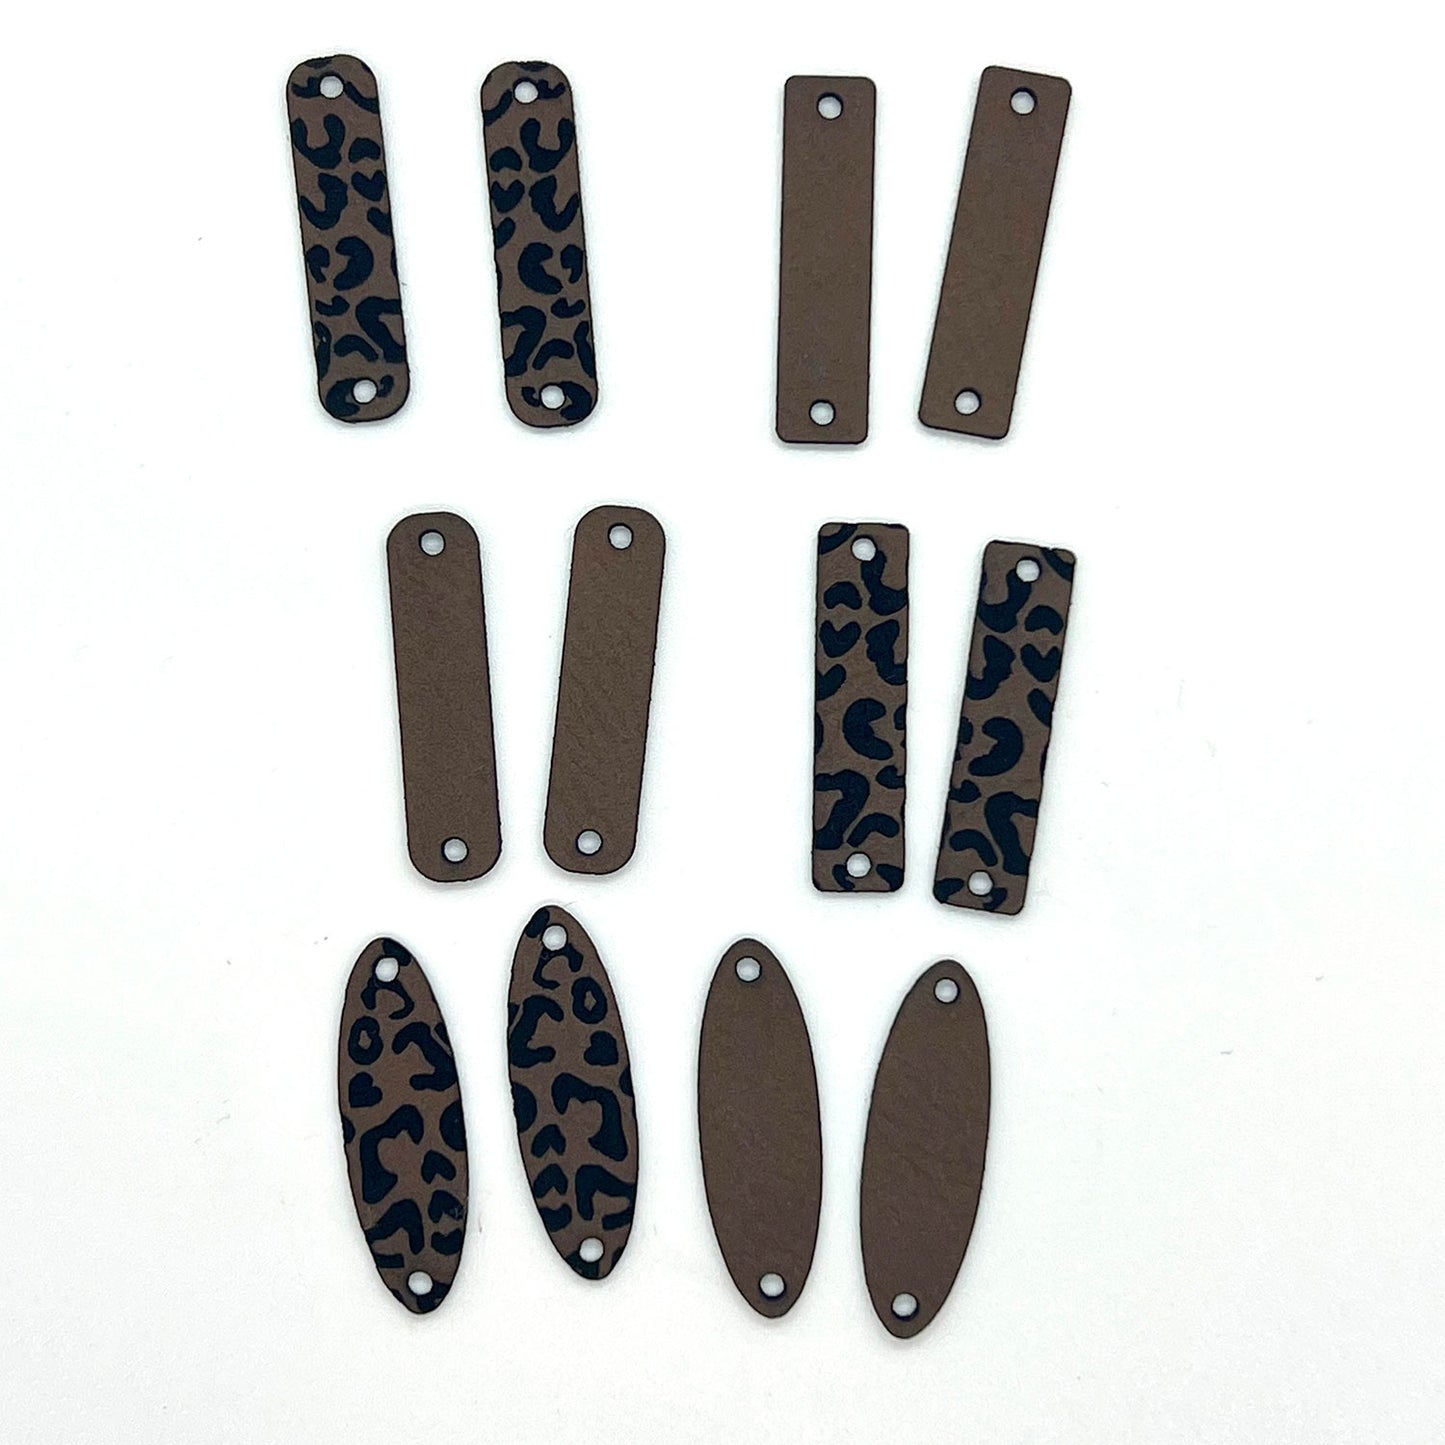 Leather Earring Tabs - Leopard Print (Set of 6)